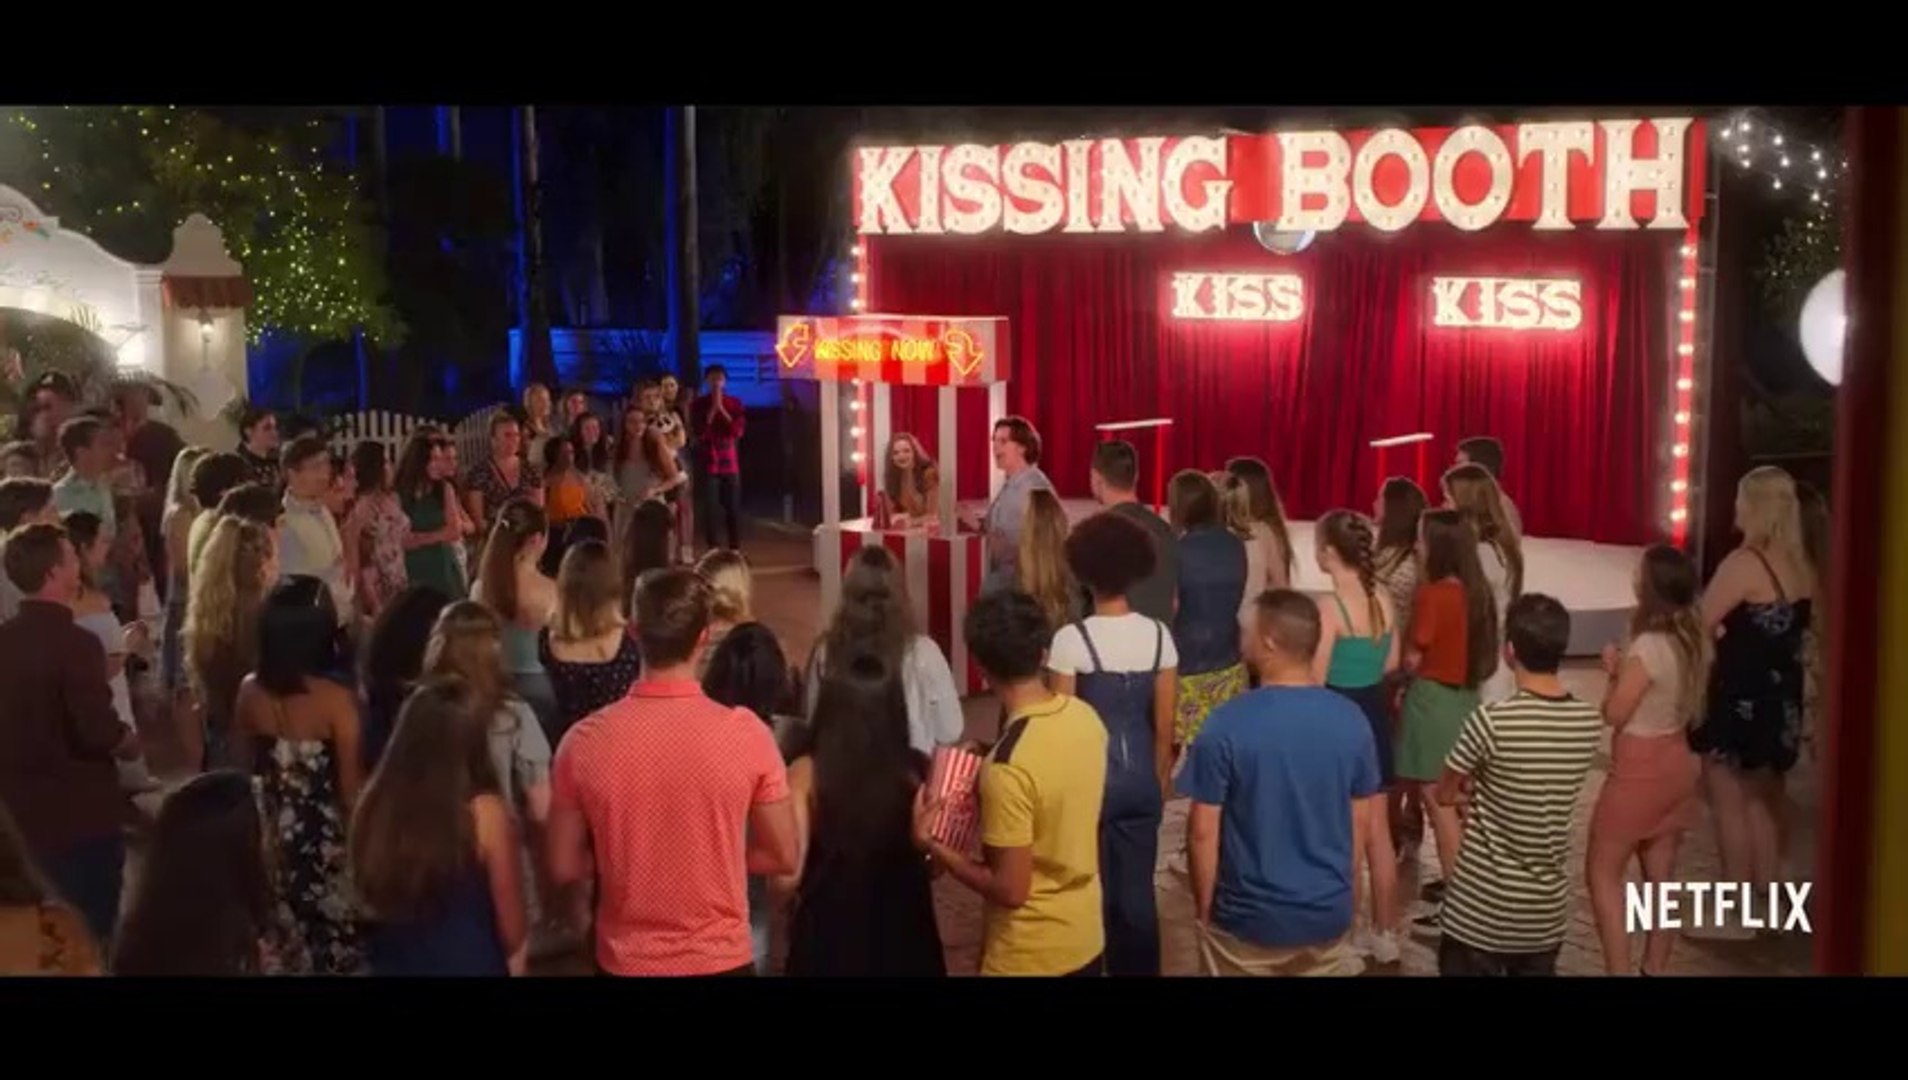 Stream|» DEUTSCH THE KISSING BOOTH 2 Film anschauen'mp4 - video Dailymotion